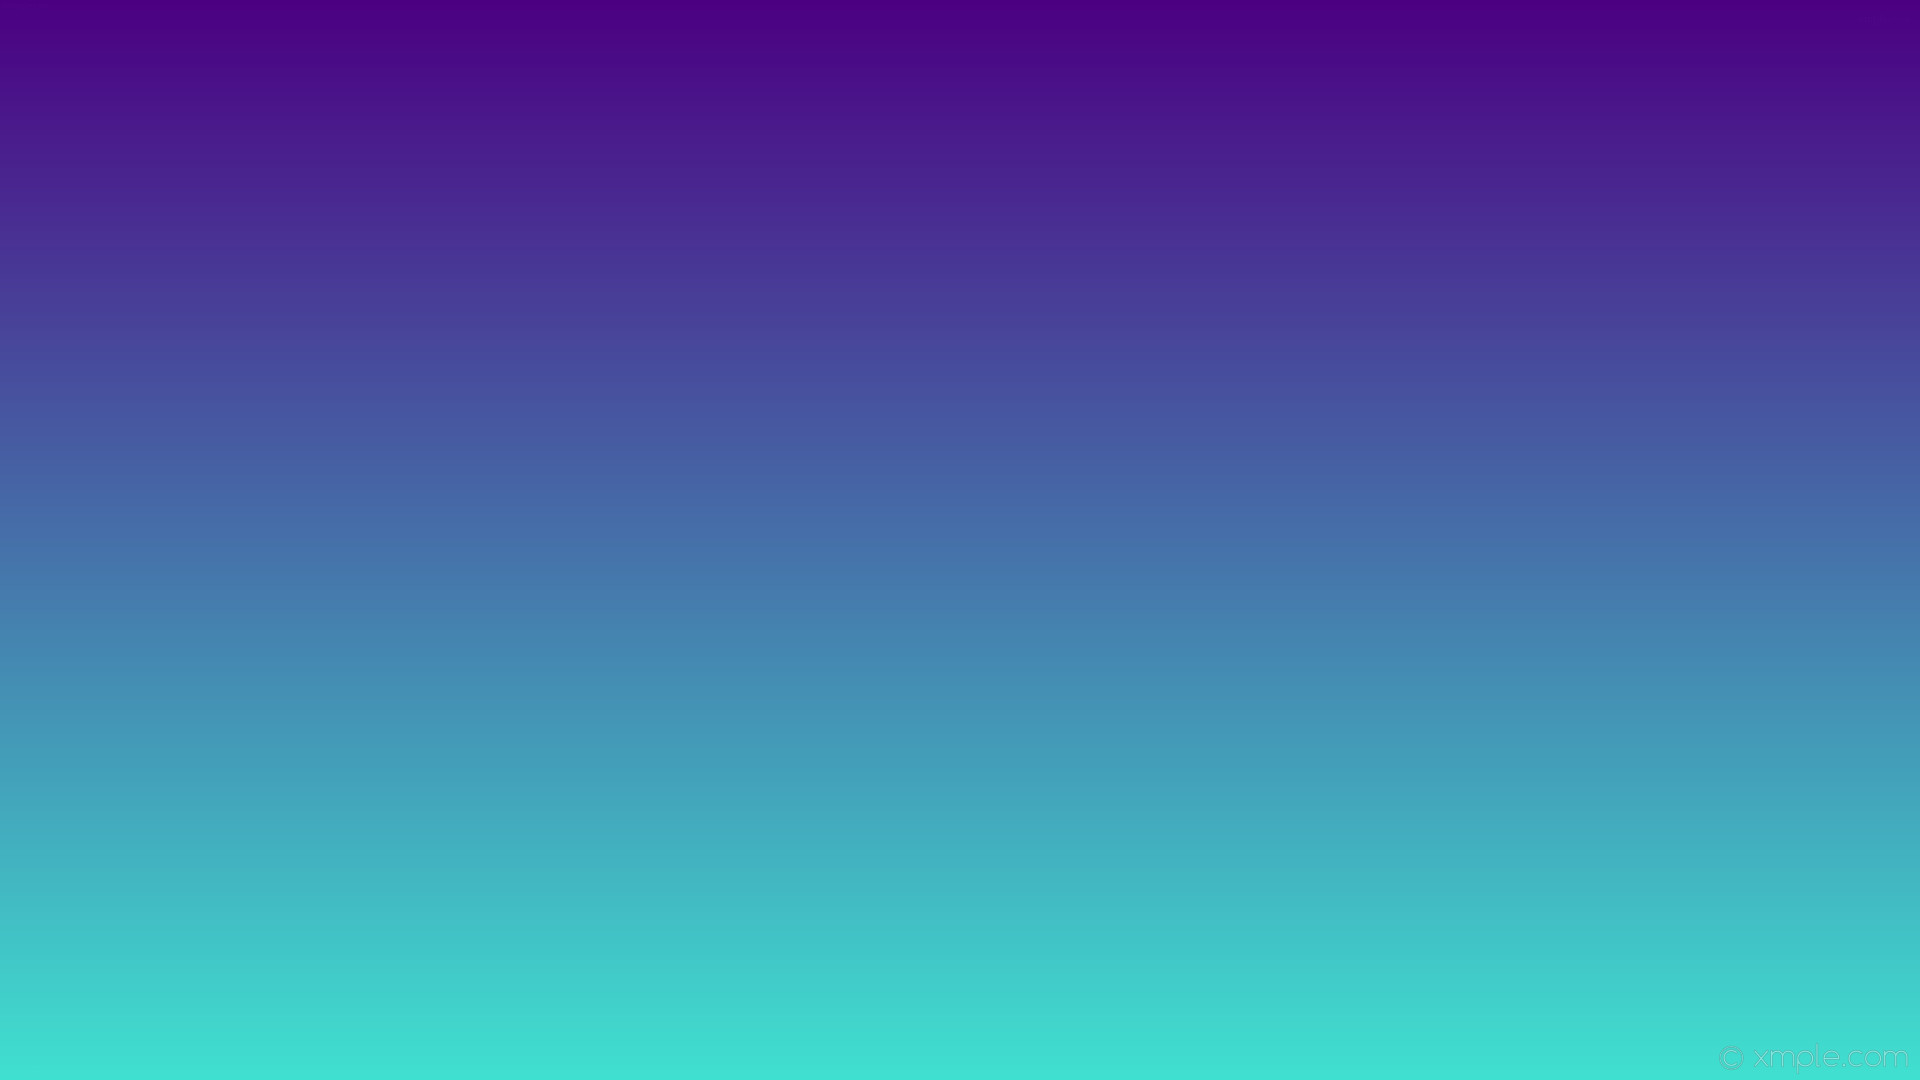 1920x1080 wallpaper purple linear gradient blue indigo turquoise #4b0082 #40e0d0 90Â°